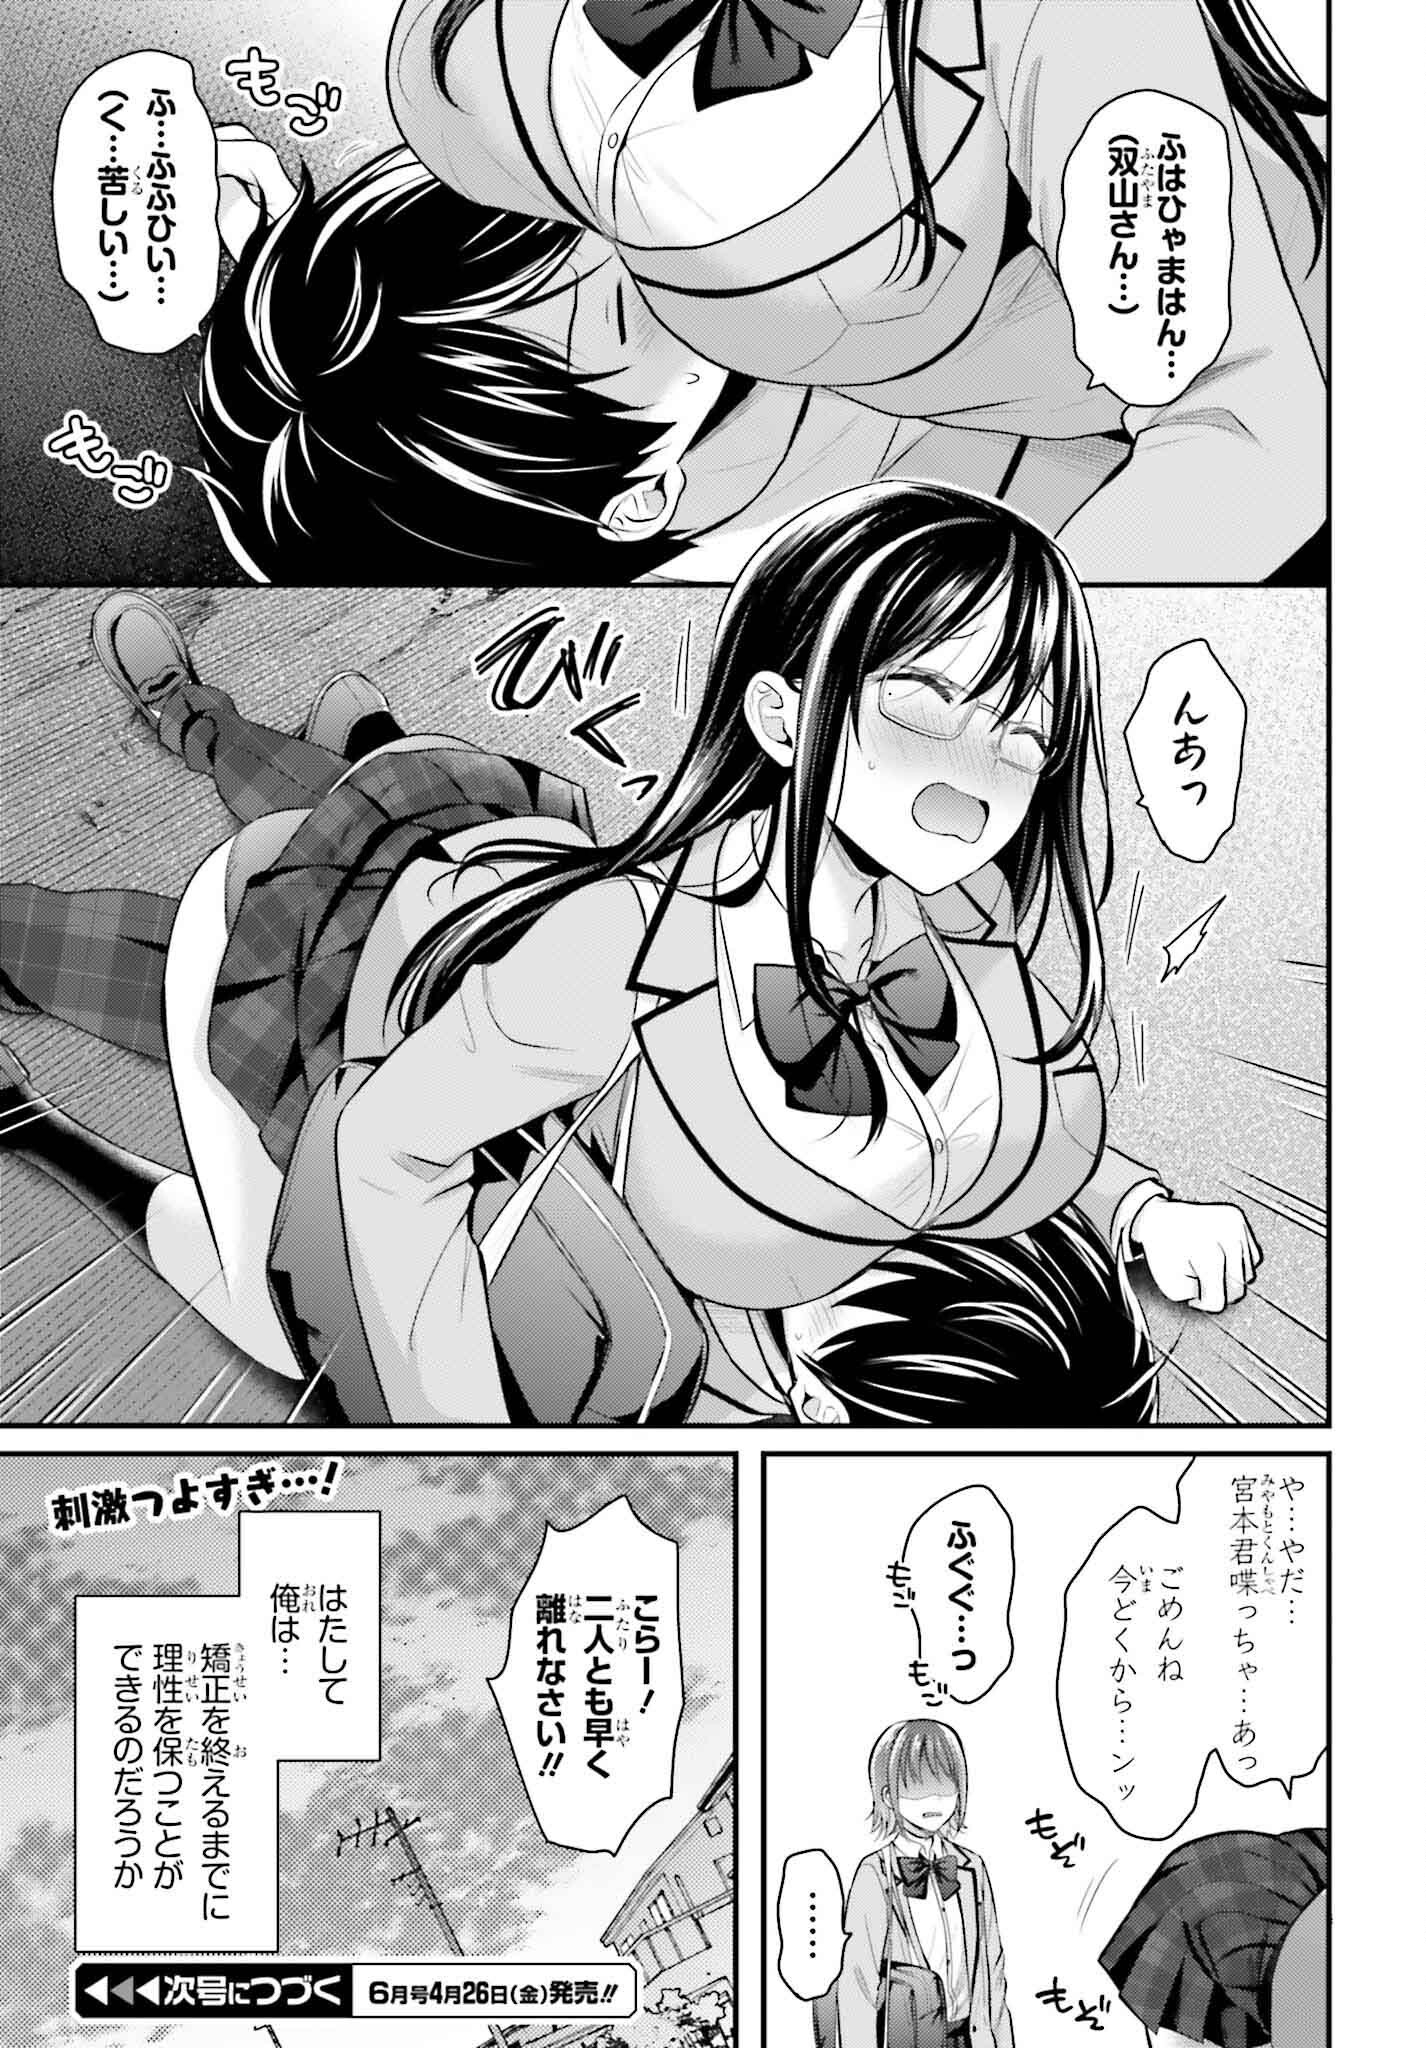 Boukensha ni Nare Nakatta Ore, Skill Oppai Kyousei de Nayameru Ano Ko wo Hito Dasuke!? - Chapter 5 - Page 19